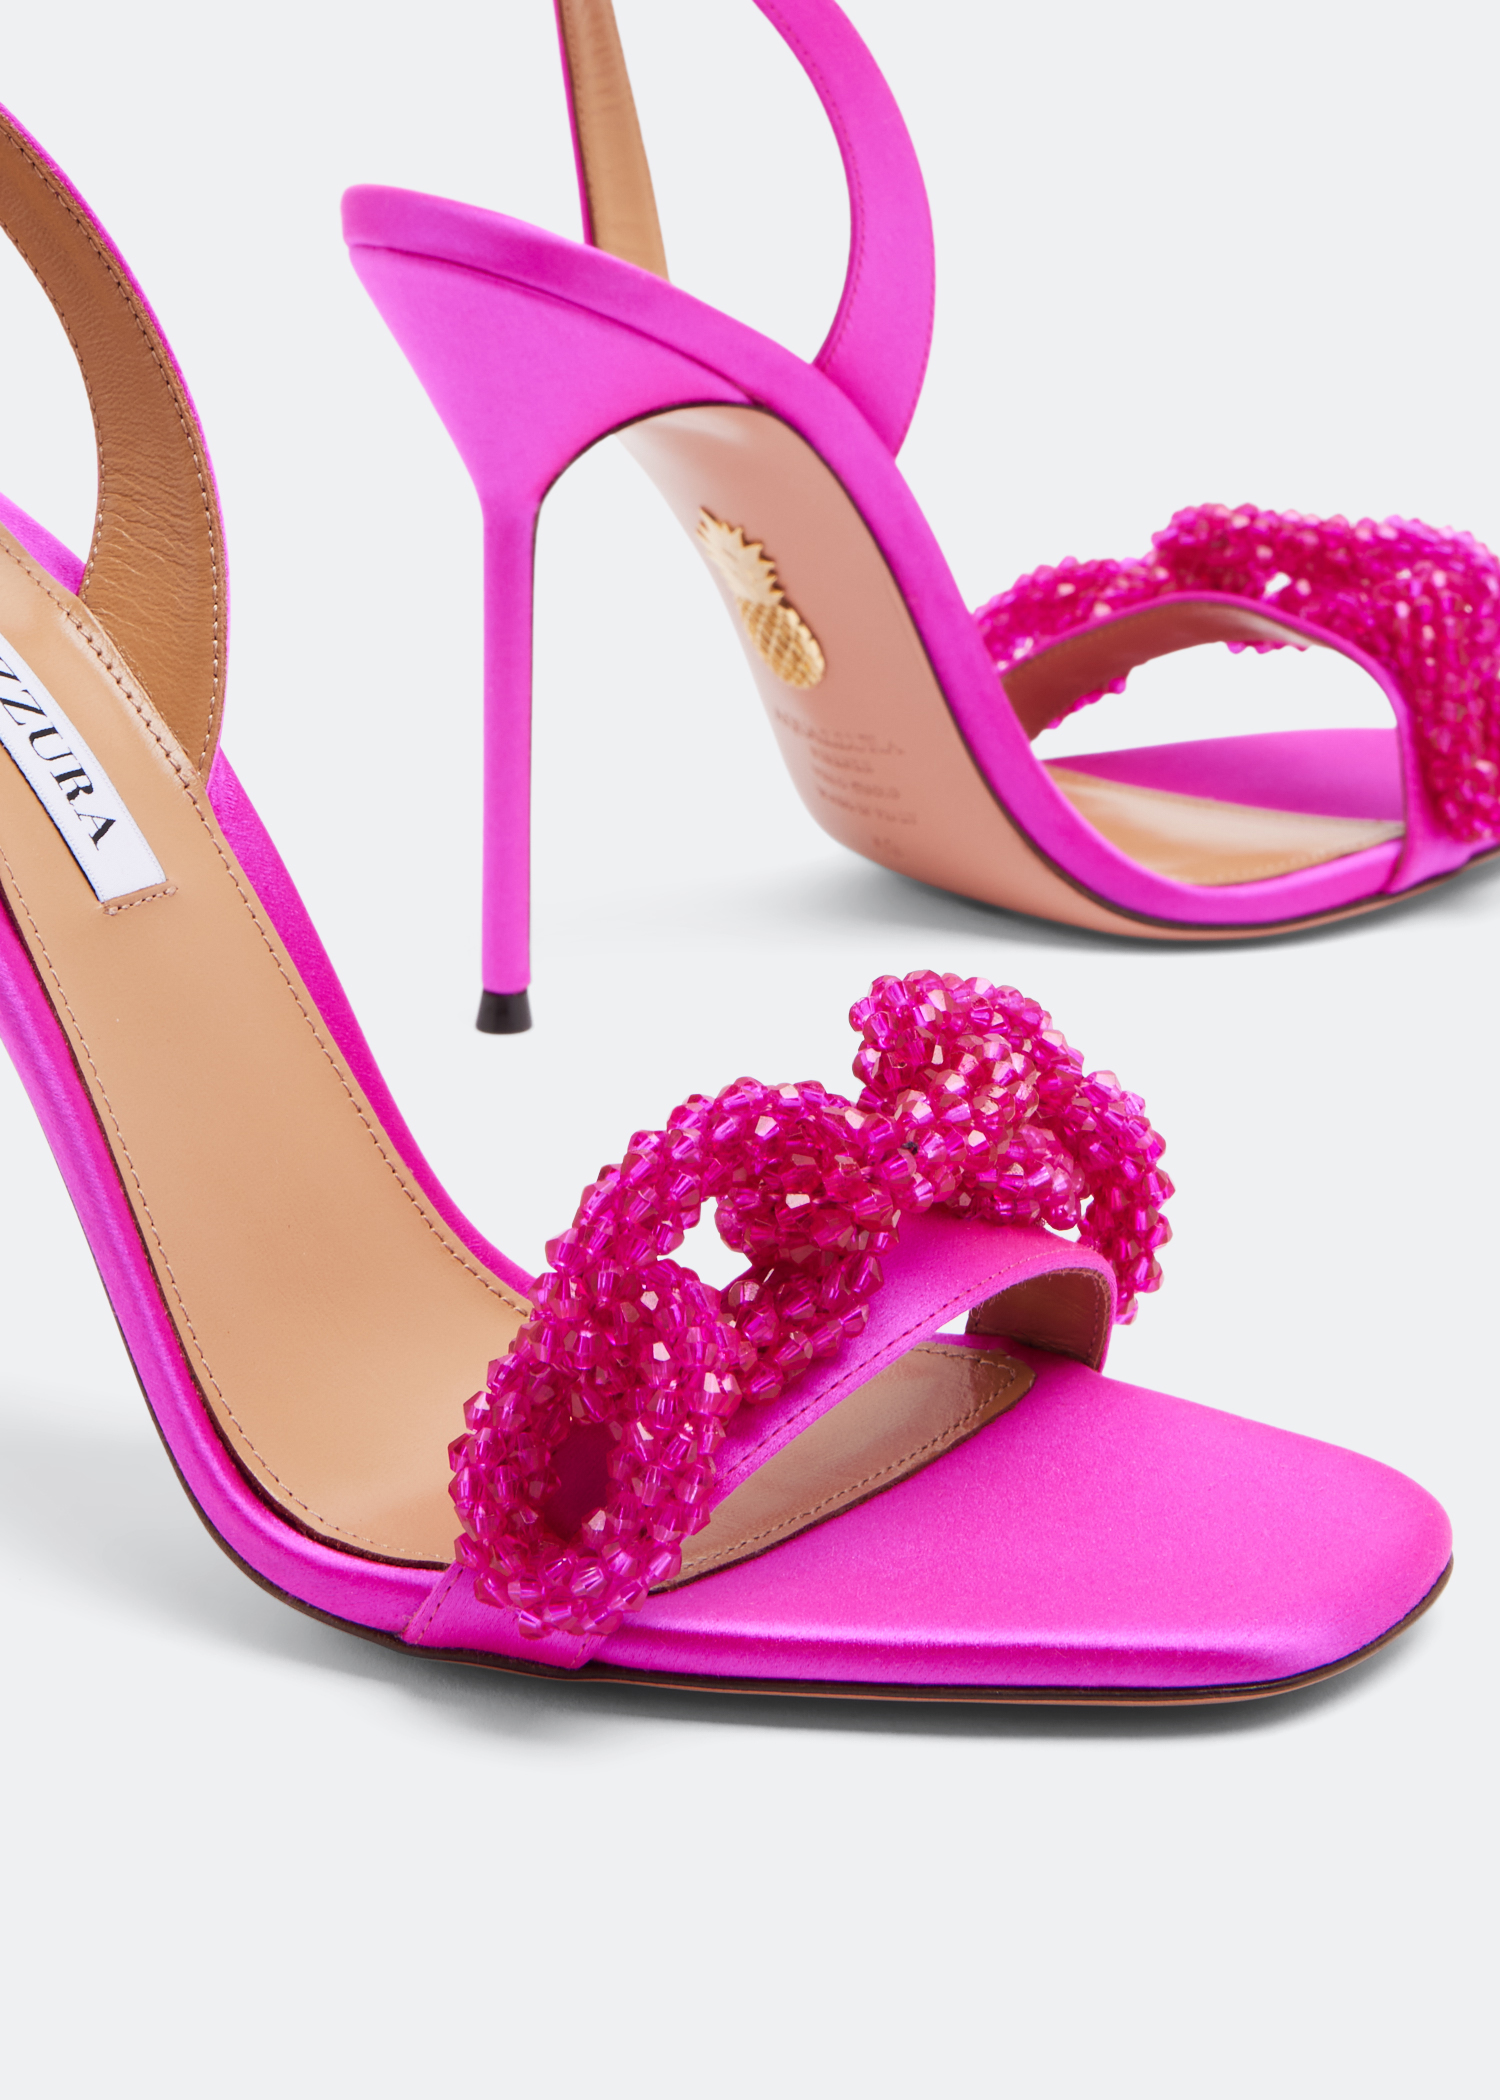 Aquazzura Chain of Love 105 sandals for Women - Pink in KSA 